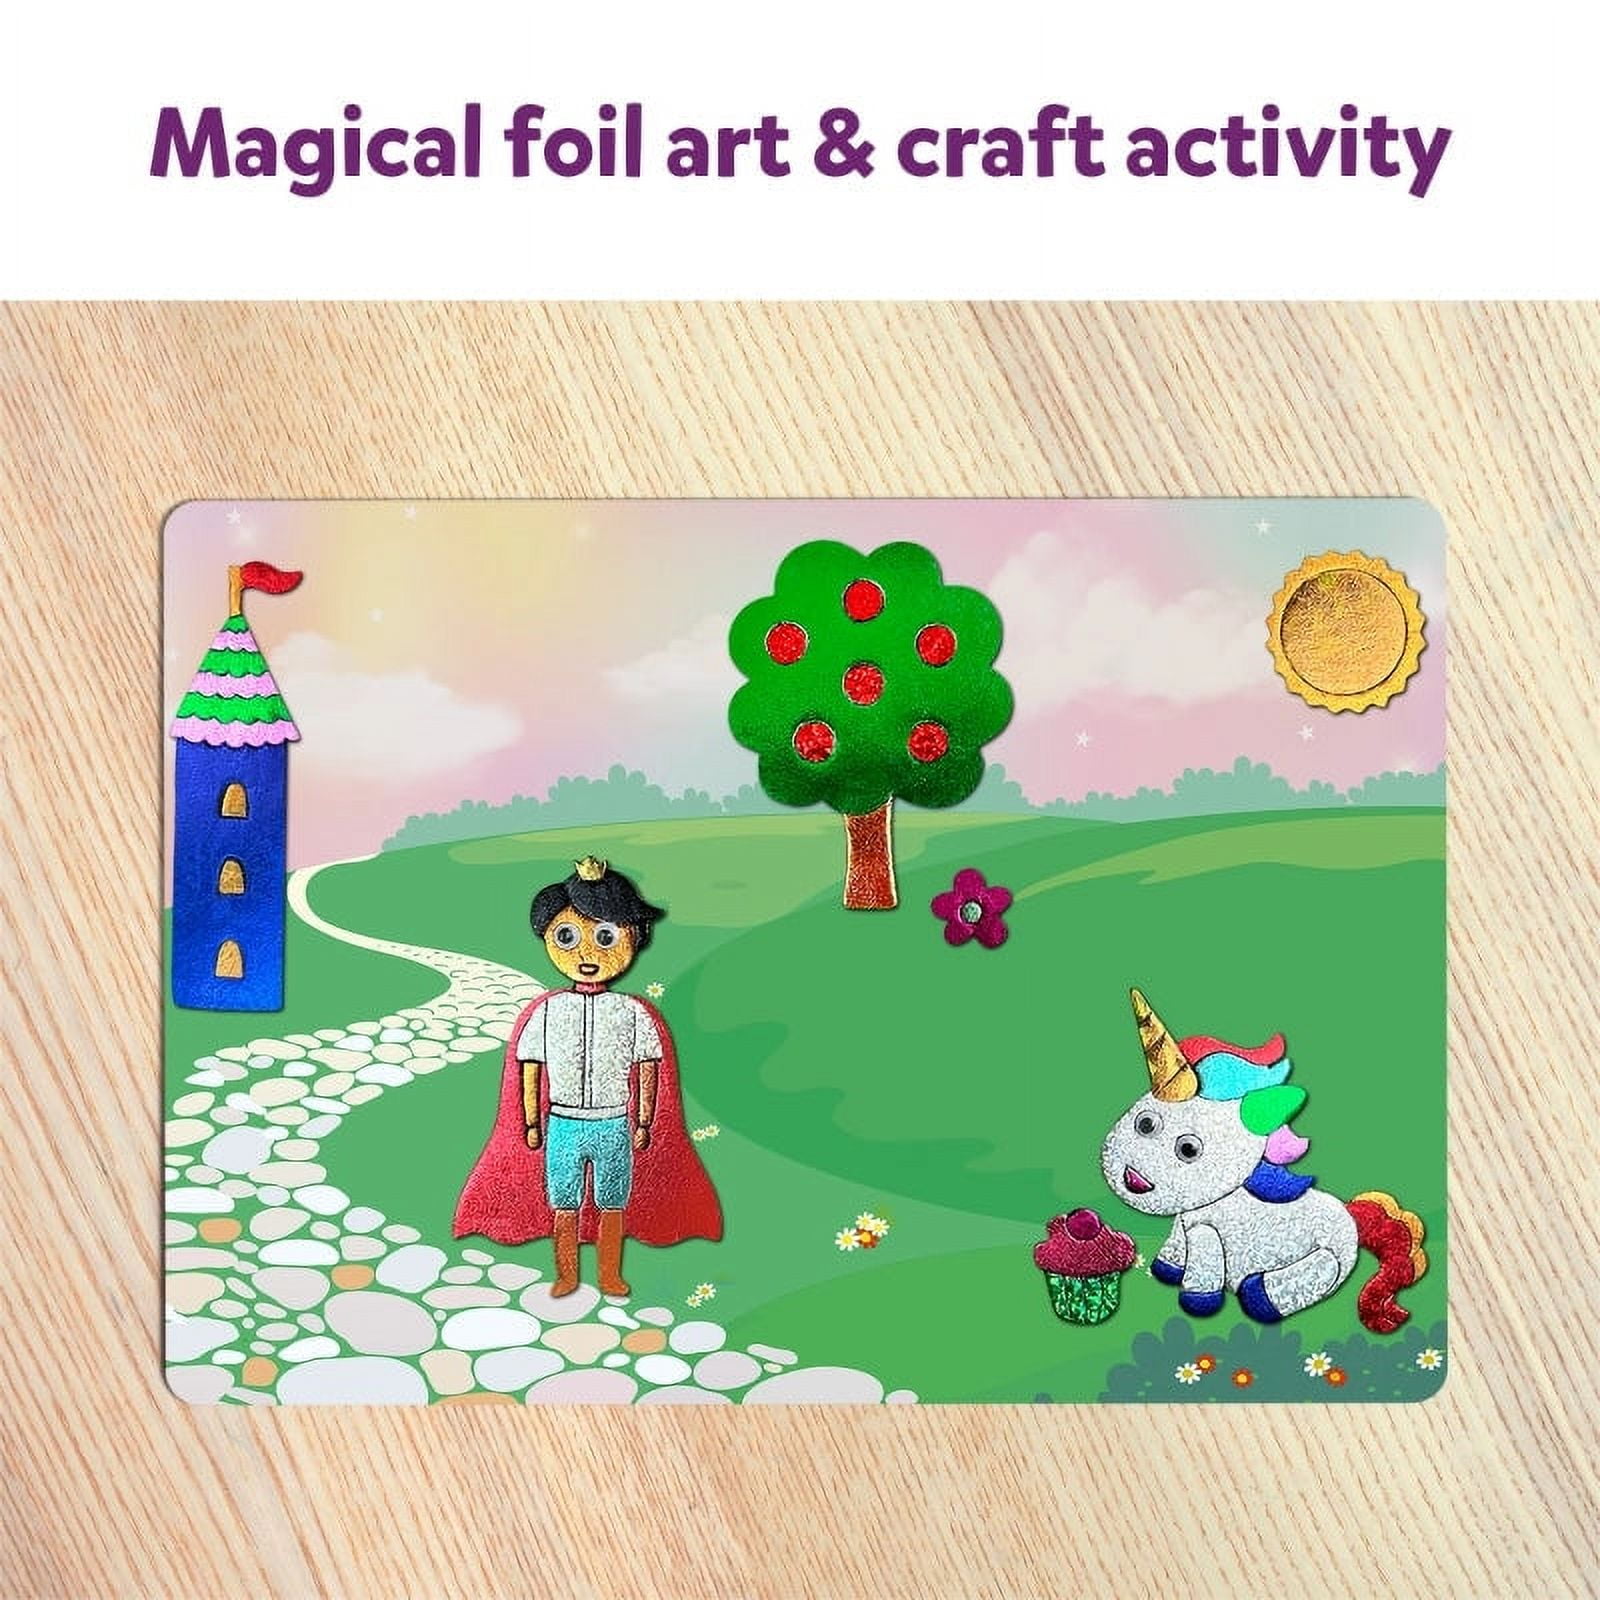 Foil Fun: Unicorn & Princess  No Mess Art Kit (ages 4-9) – Skillmatics